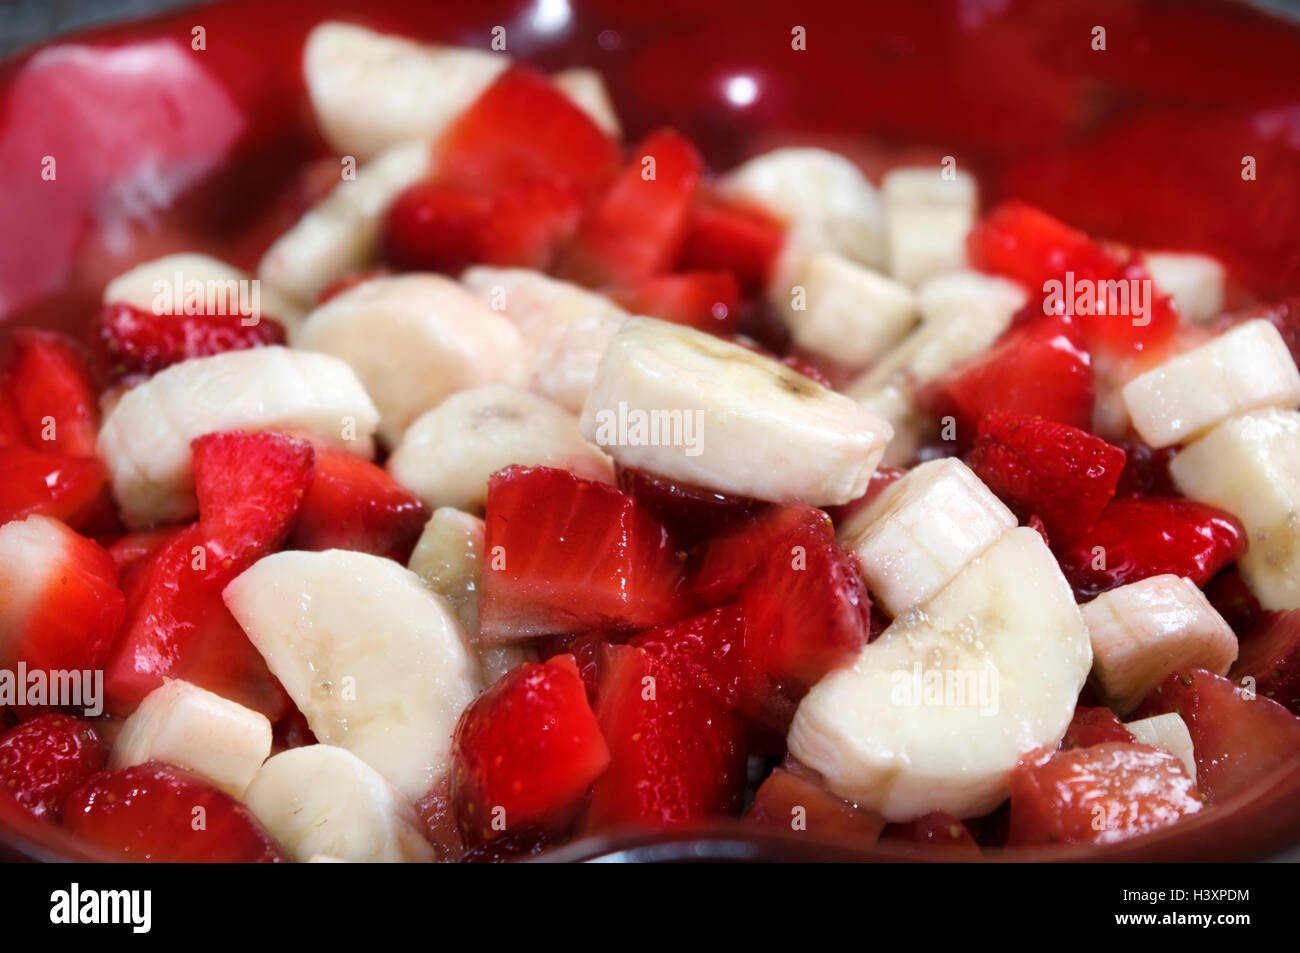 salad of strawberries and ripe banana Stock Photo